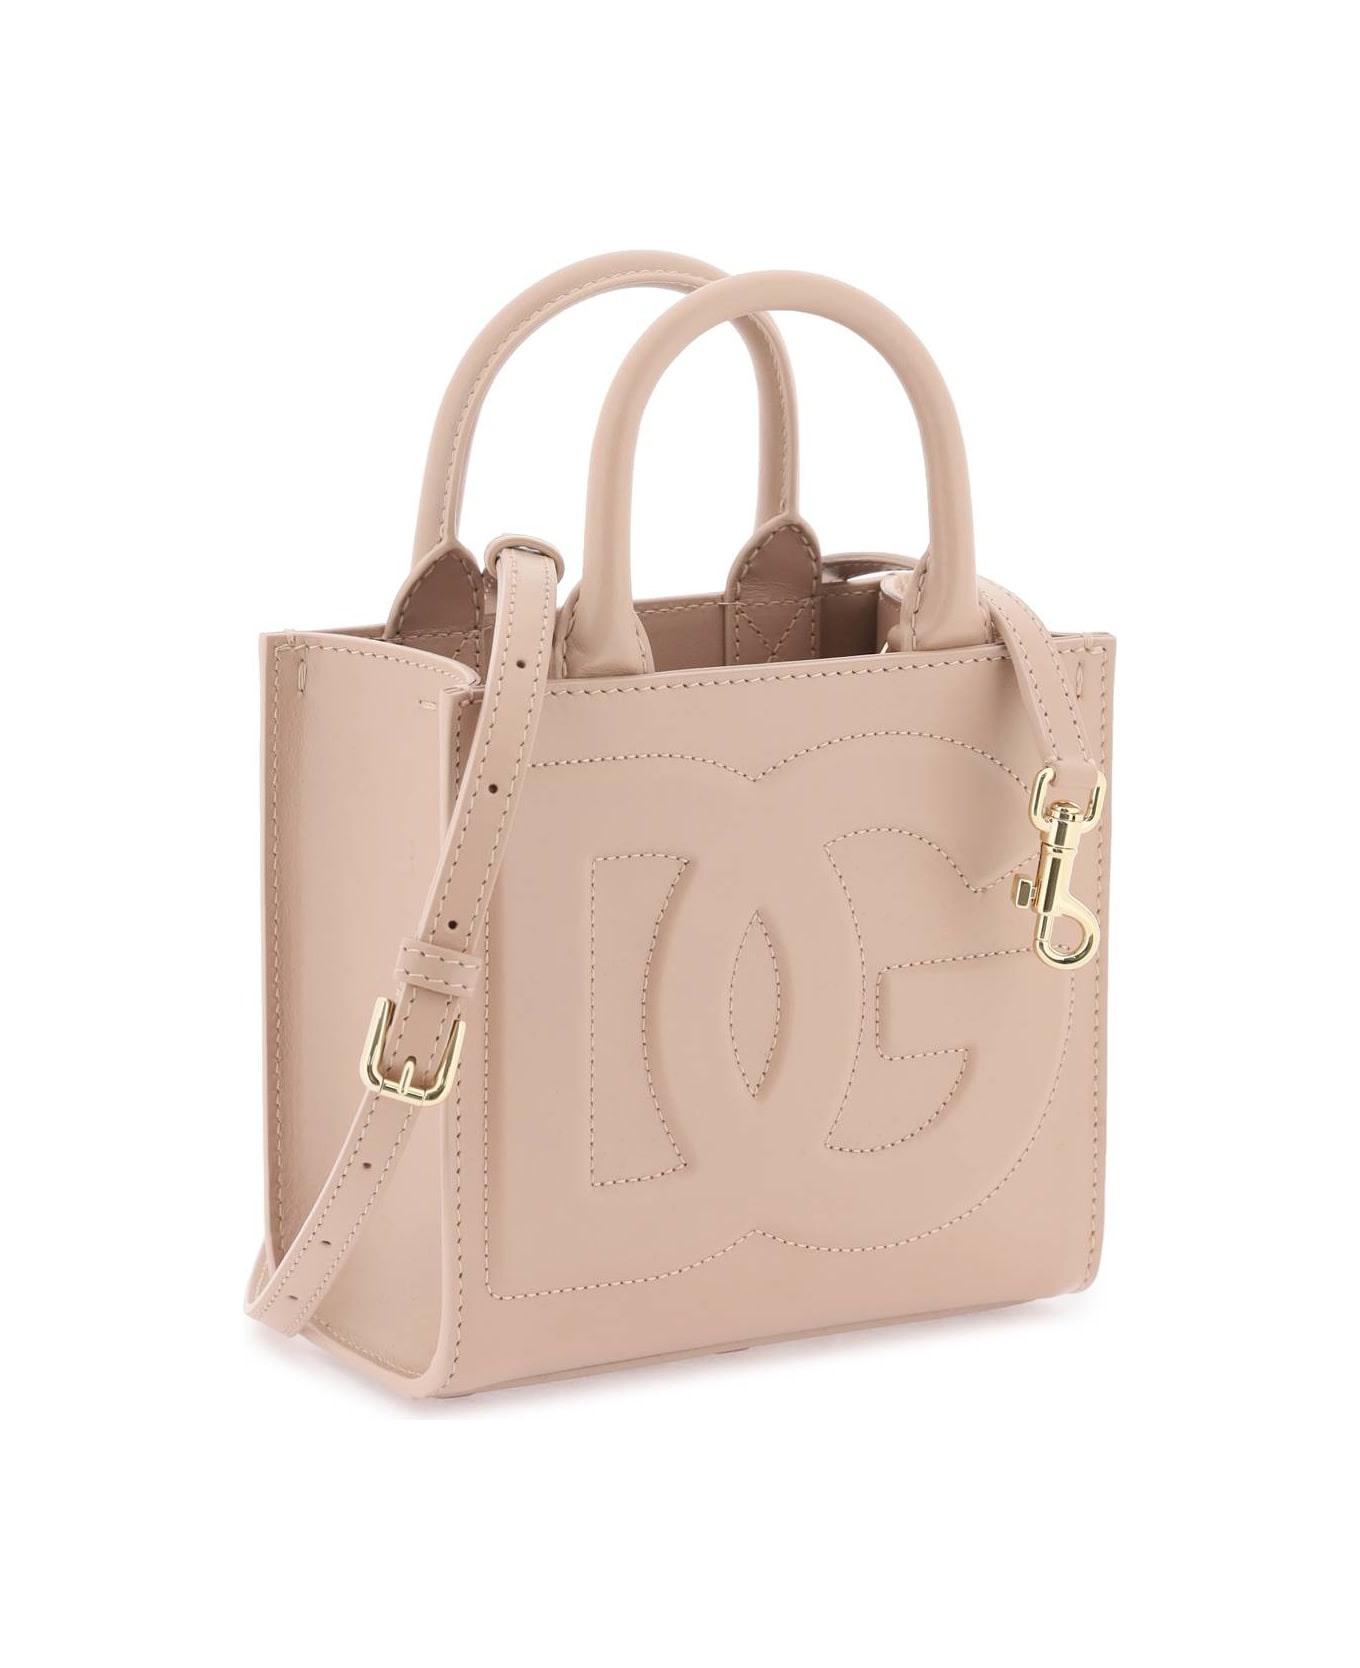 Dolce & Gabbana Dg Daily Tote Bag - Pale pink